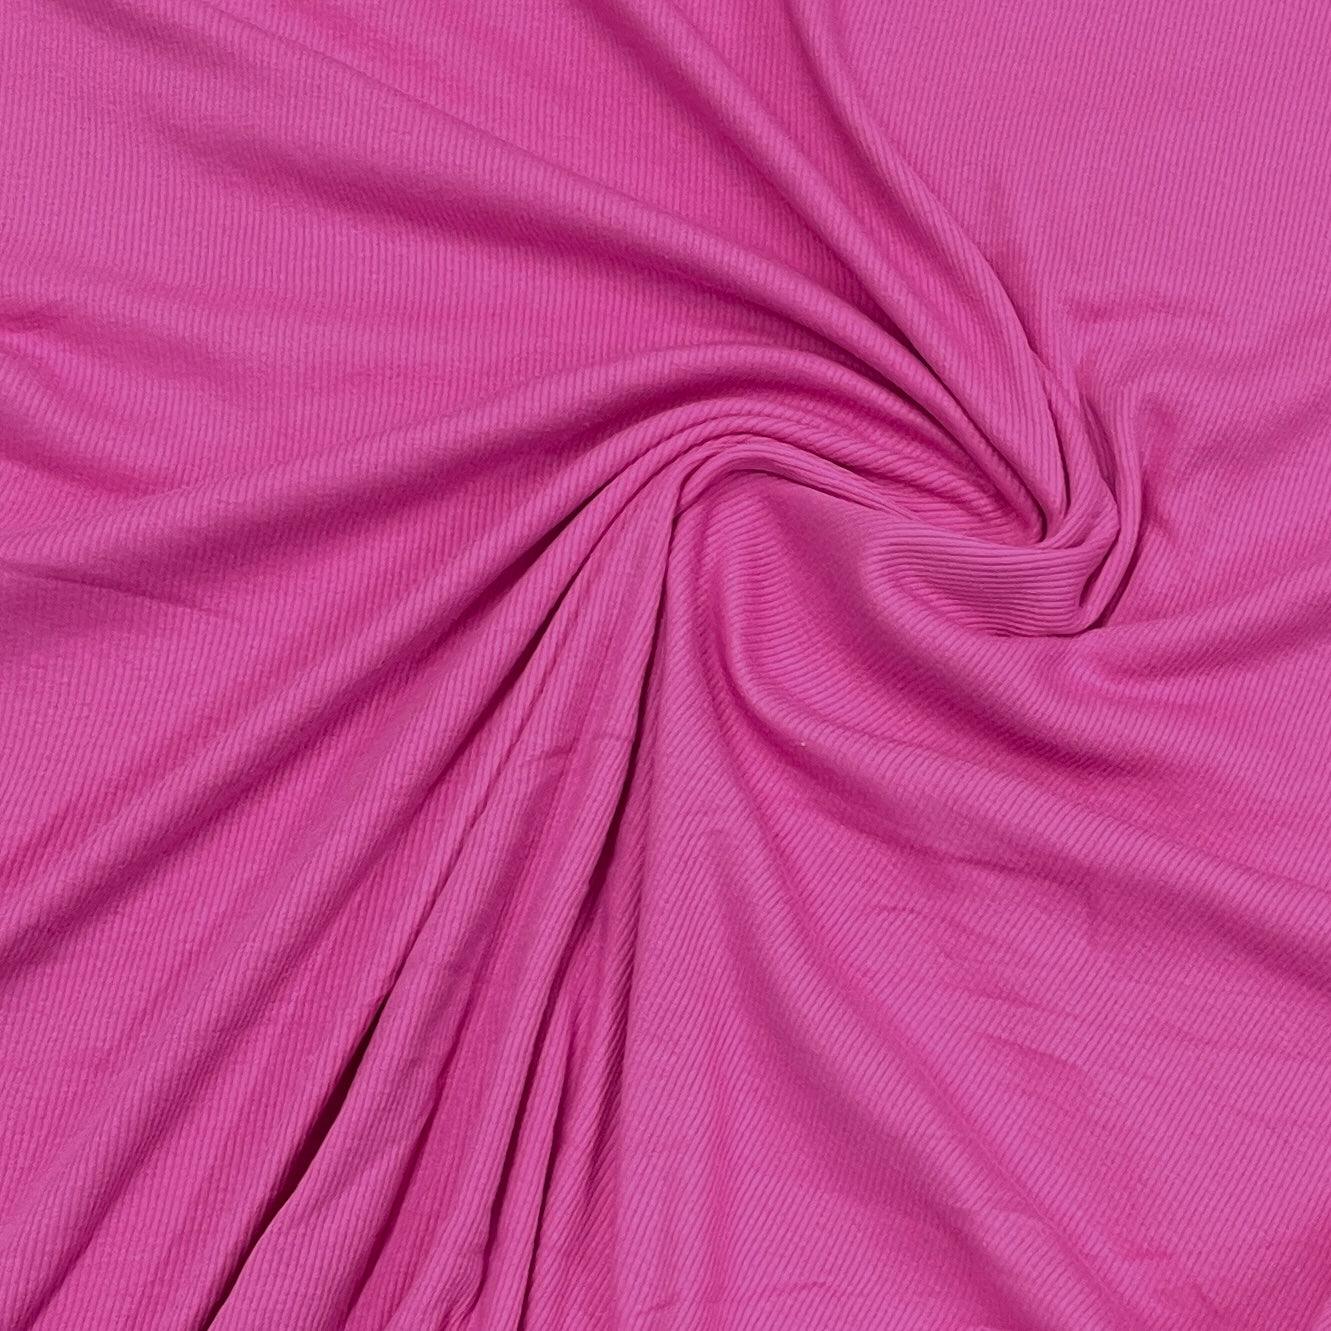 Hot Pink Polyester/Spandex Rib Knit Fabric - 2x2 - Nature's Fabrics